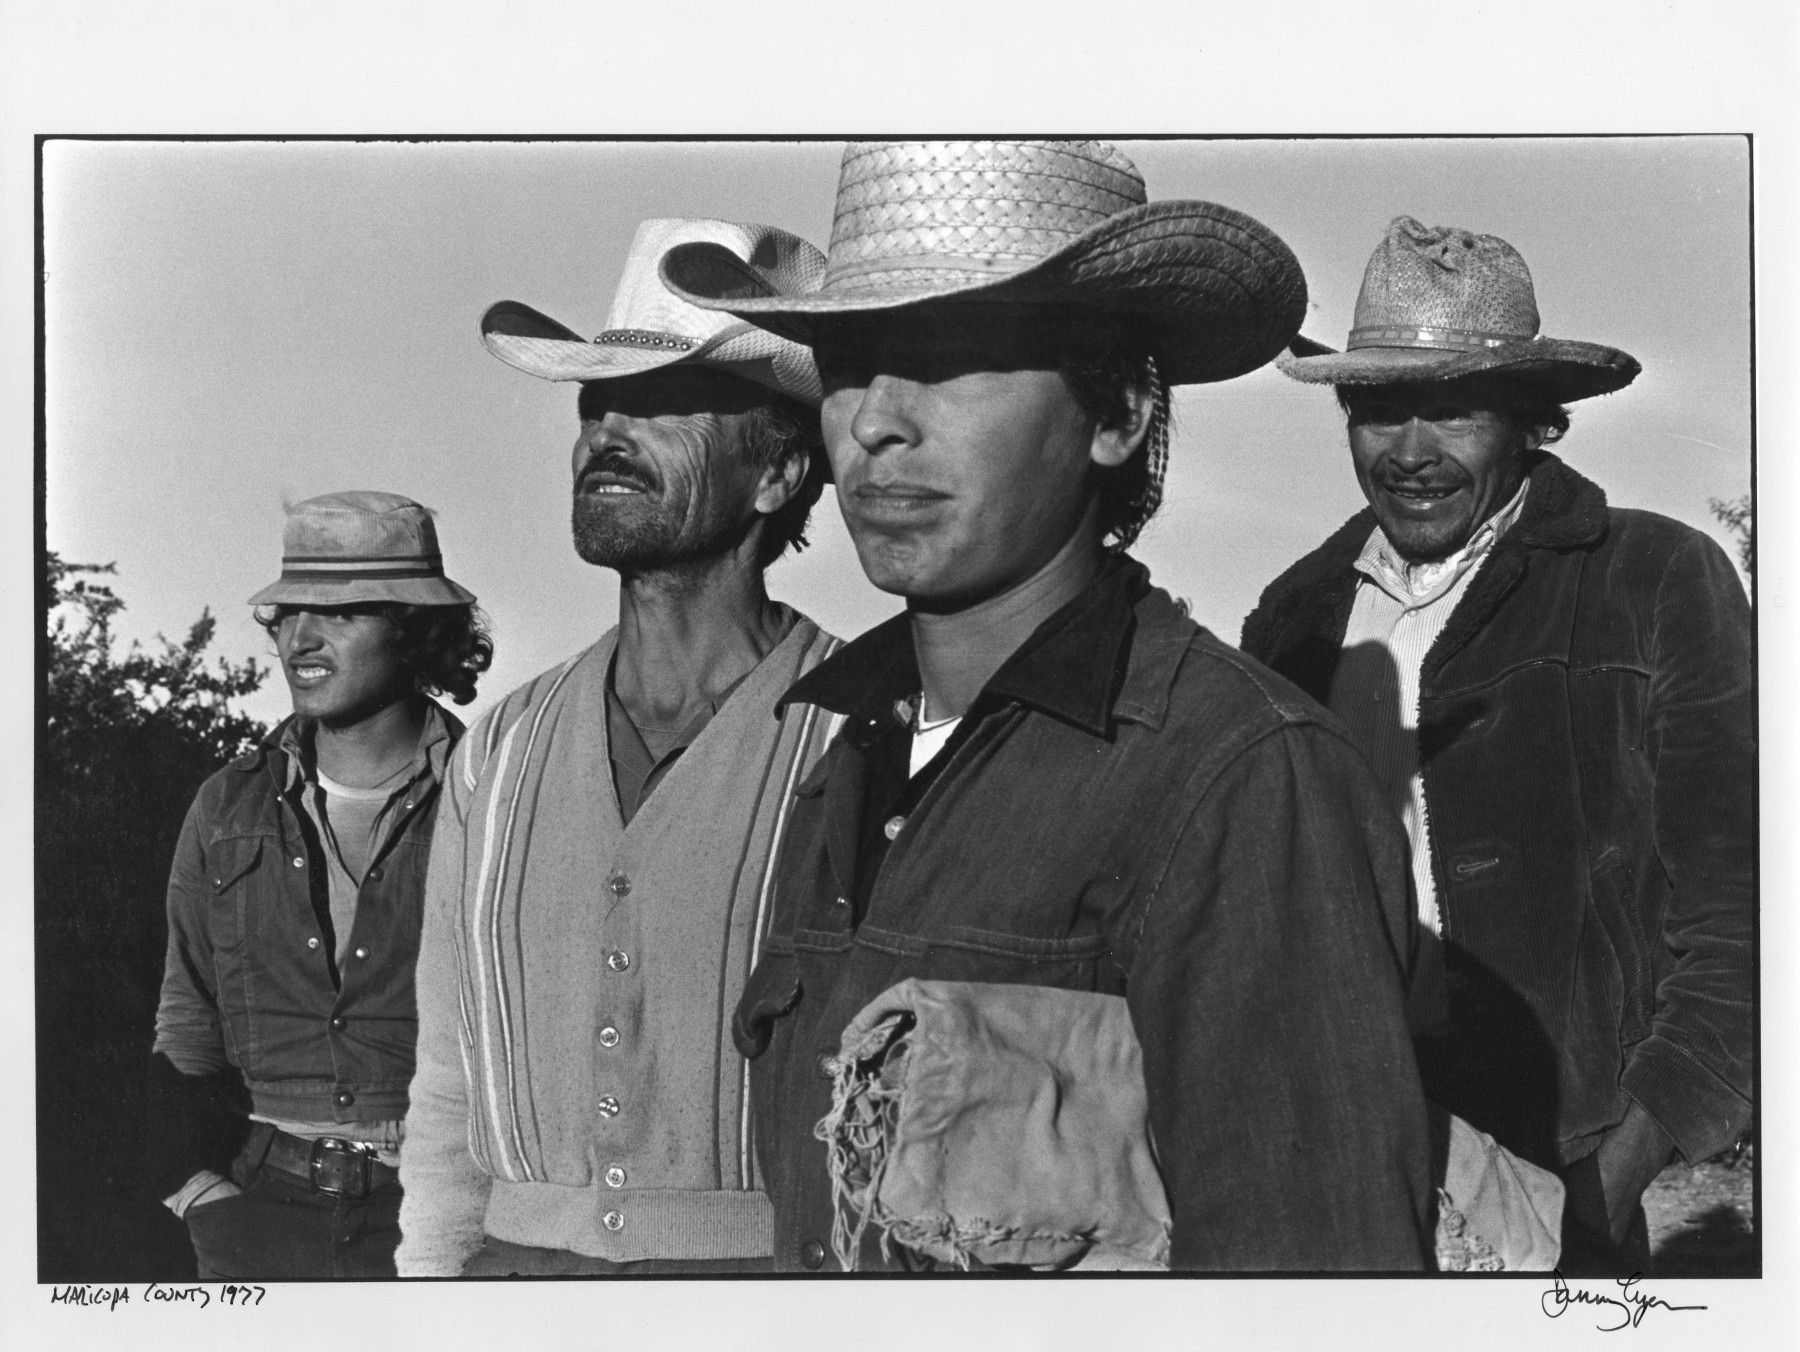 Copyright Danny Lyon / Magnum Photos, Maricopa County, 1977